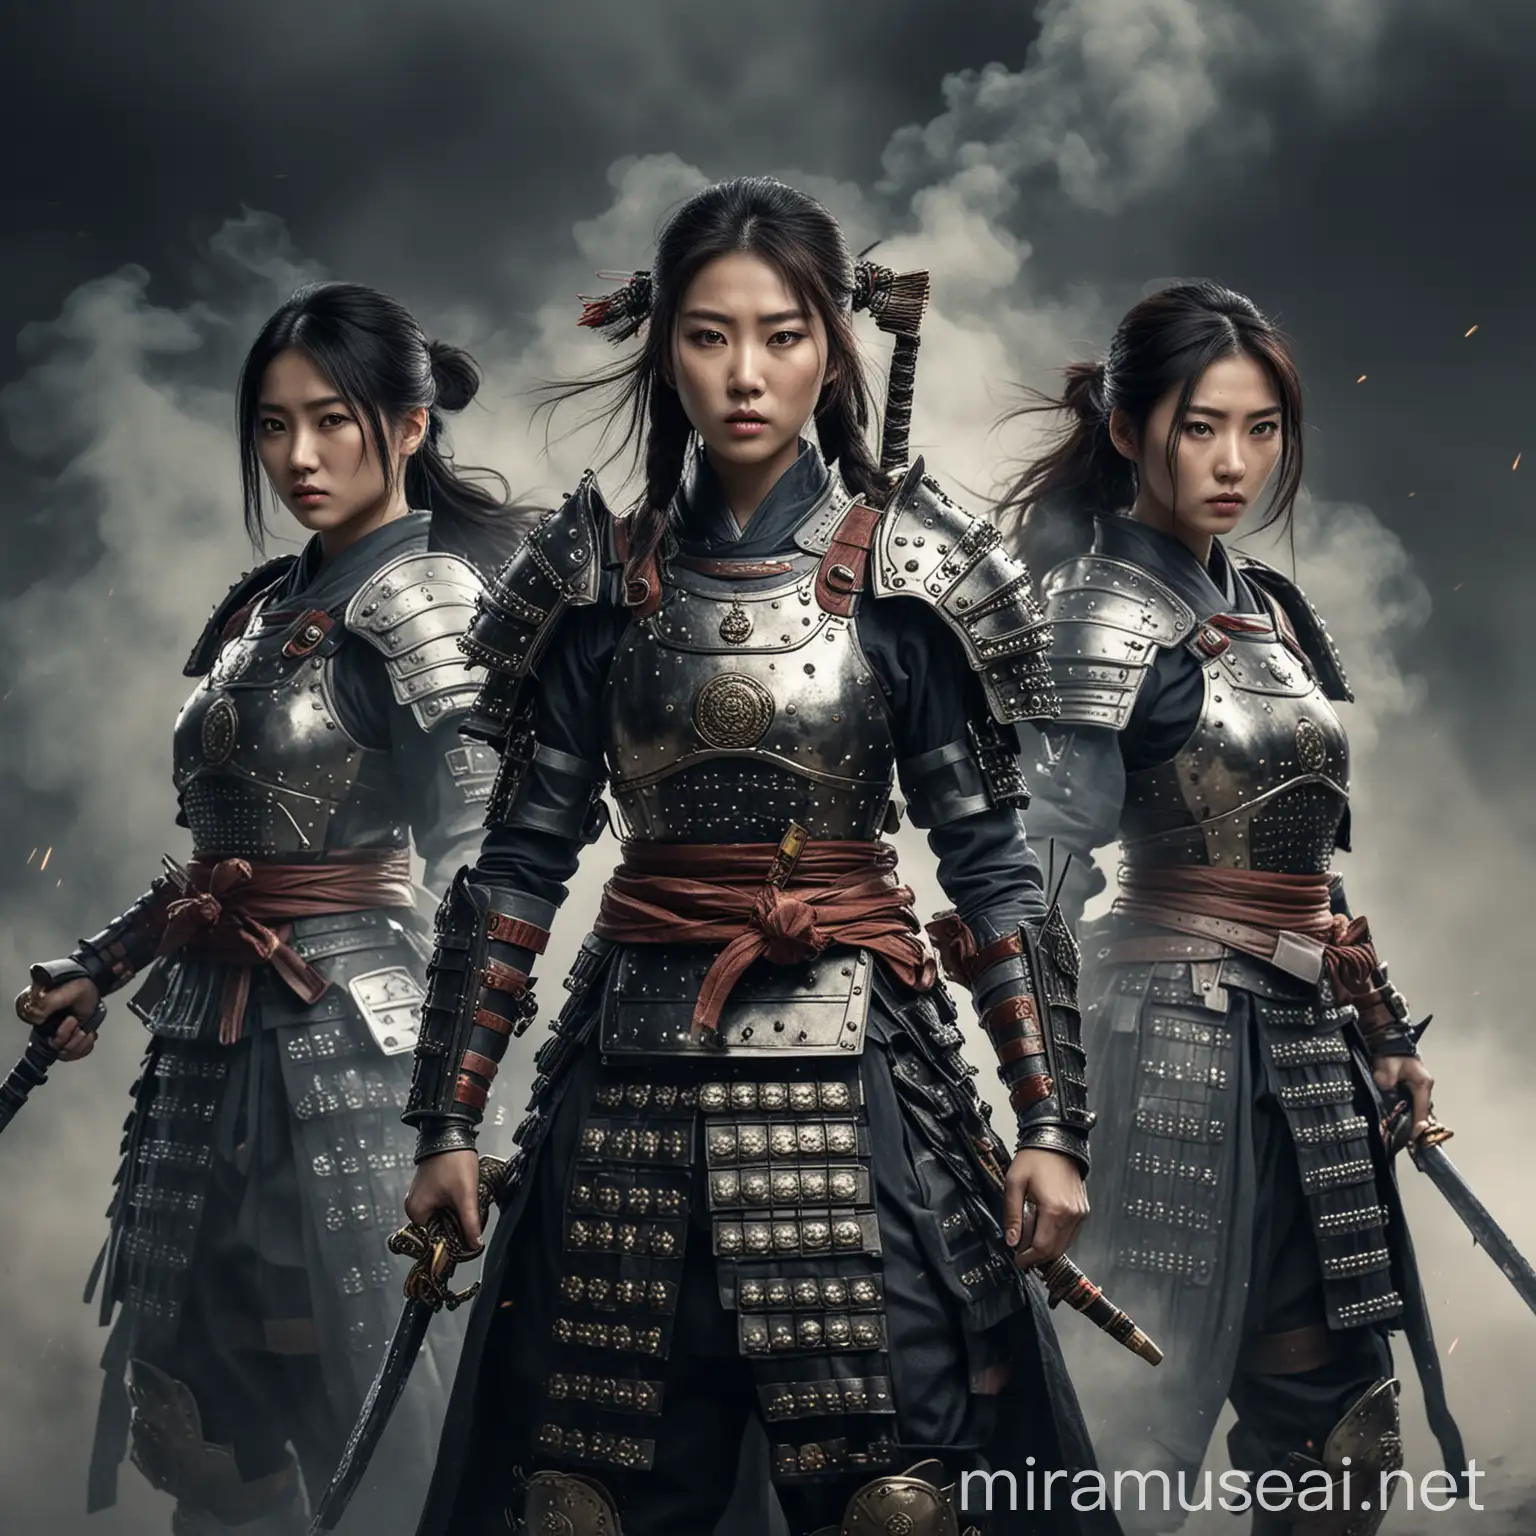 
Tiga wanita Korea cantik memakai baju zirah,memegang samurai sedang berdiri berpose menghadap ke arah kamera efek asap,kabut dan debu, background Medan pertempuran awan hitam dan petir menyala,realistis ultra HDR extreme original face, pastikan gambar sempurna 